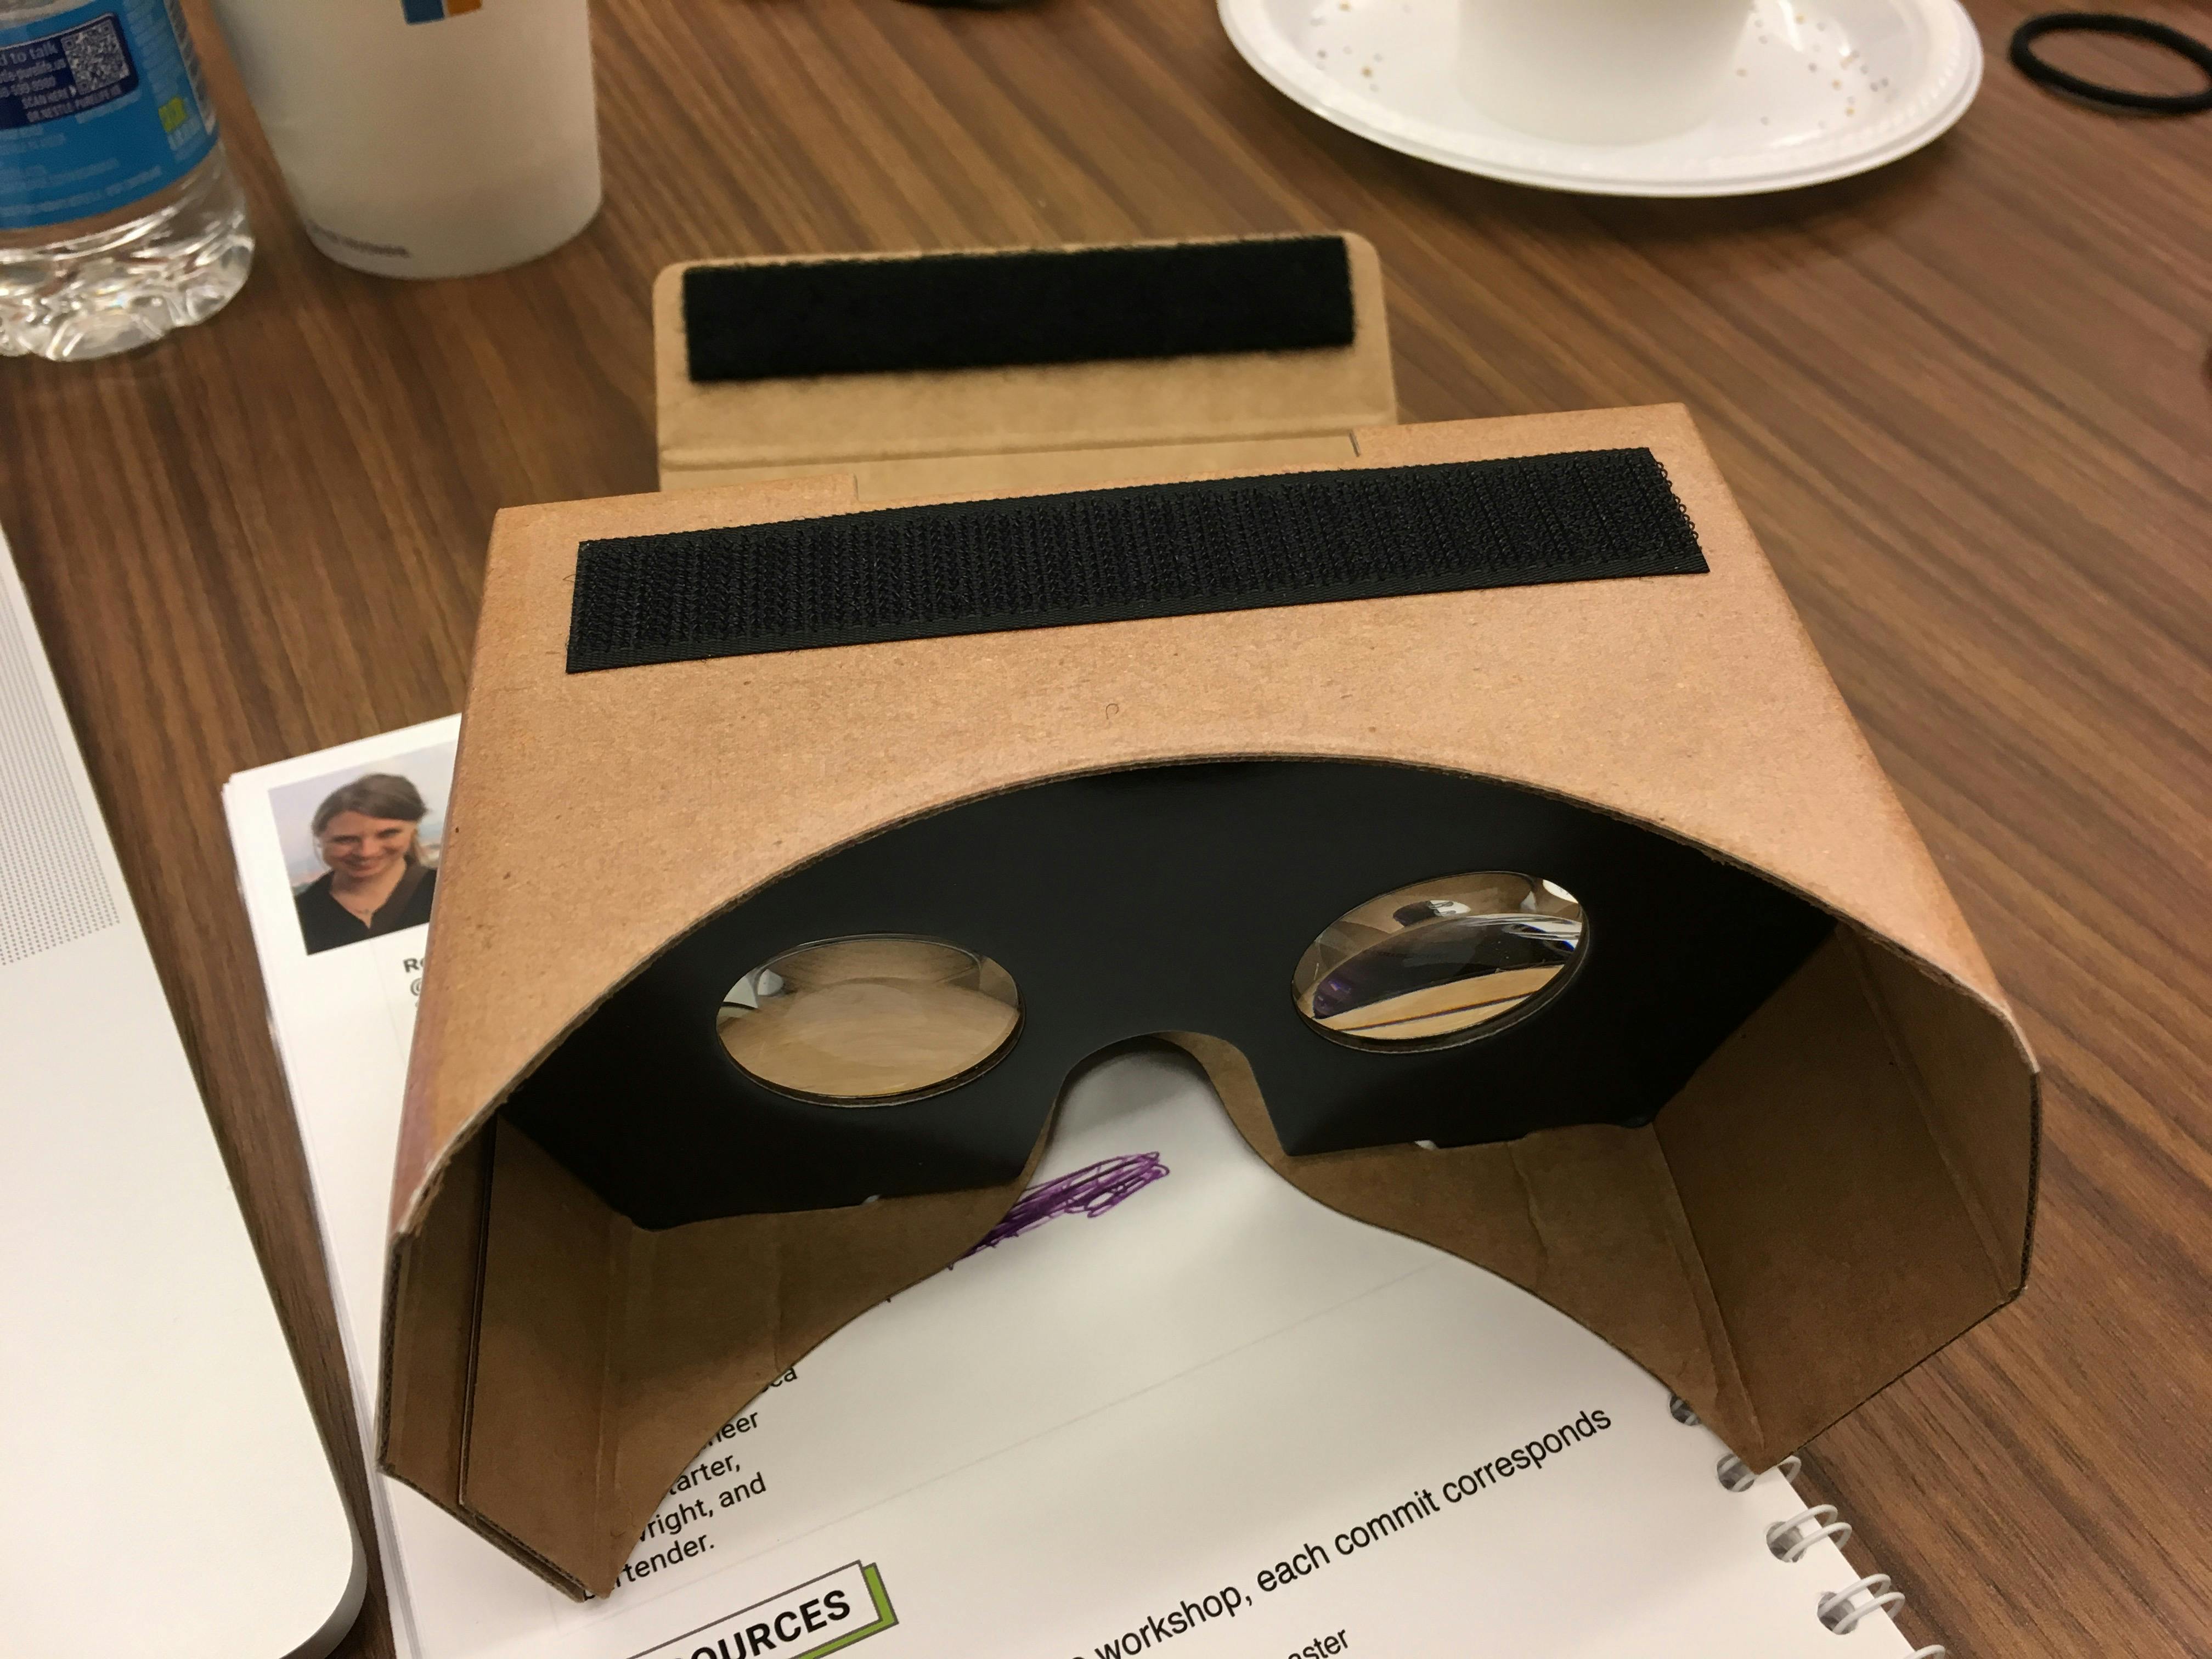 collective idea - vr cardboard - virtual reality.jpg